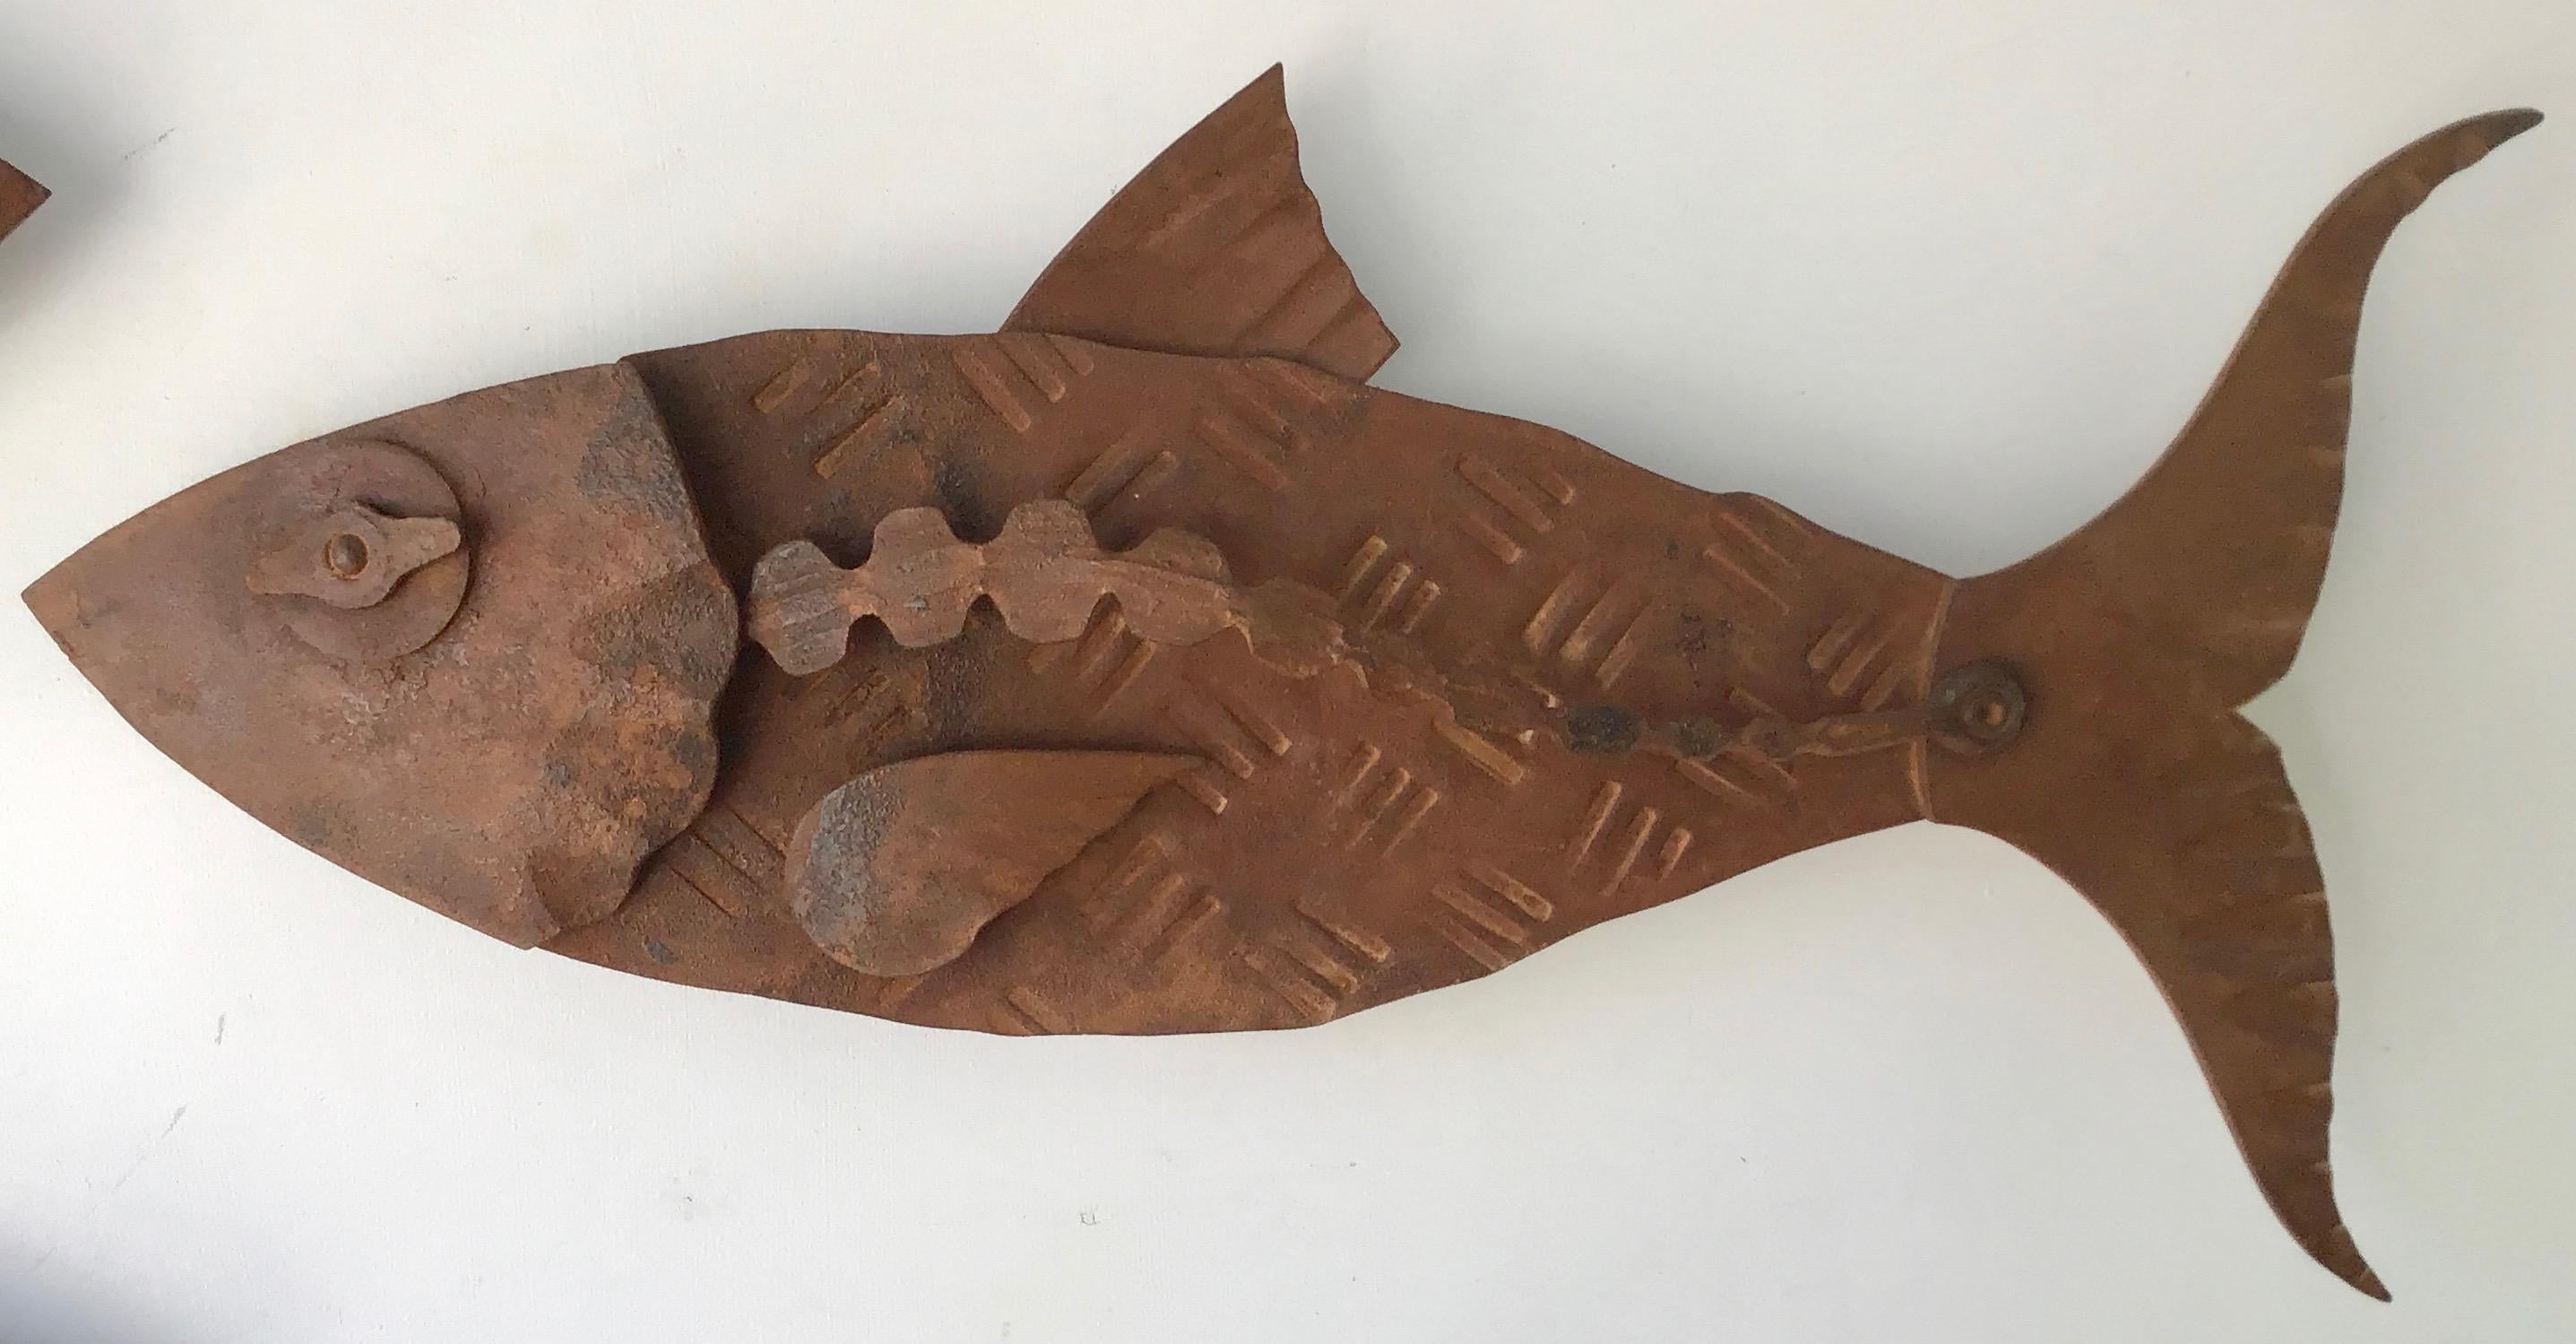 Hugh Holborn Figurative Sculpture - "Alubulidae 3" Hand forged salvaged steel fish wall sculpture